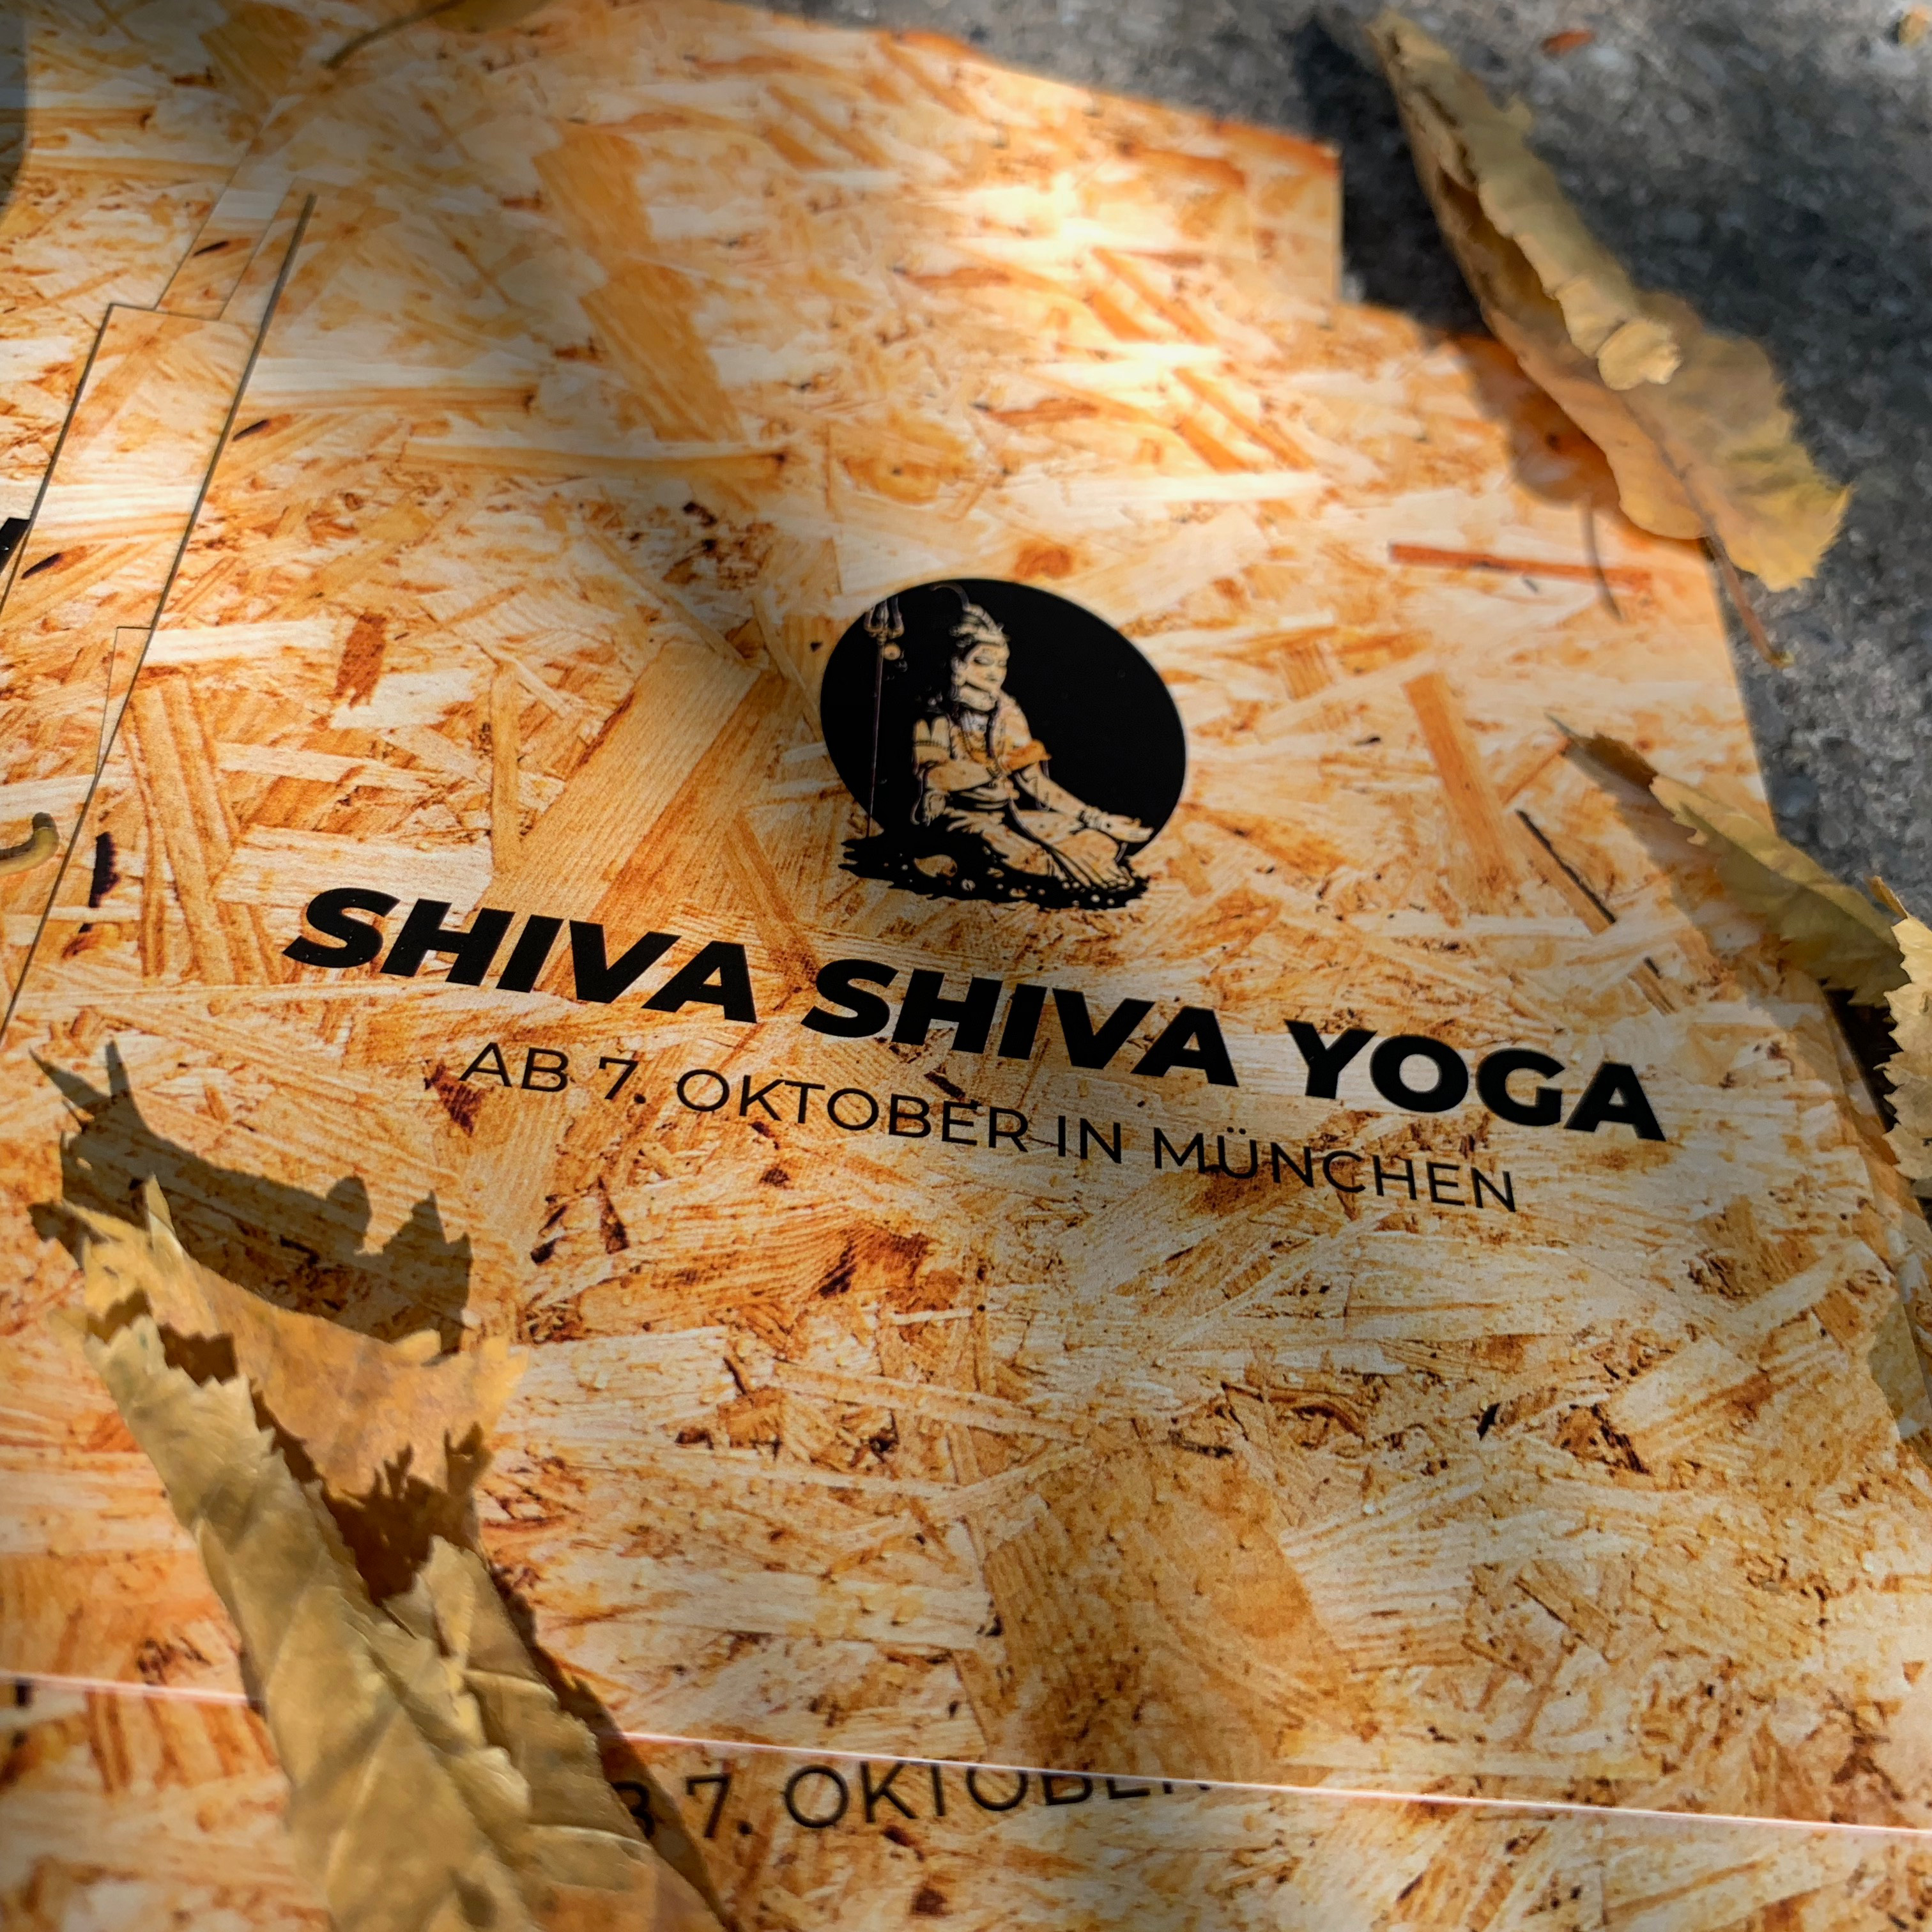 SHIVA SHIVA YOGA – 12 Antworten zum neuen Yogastudio in München